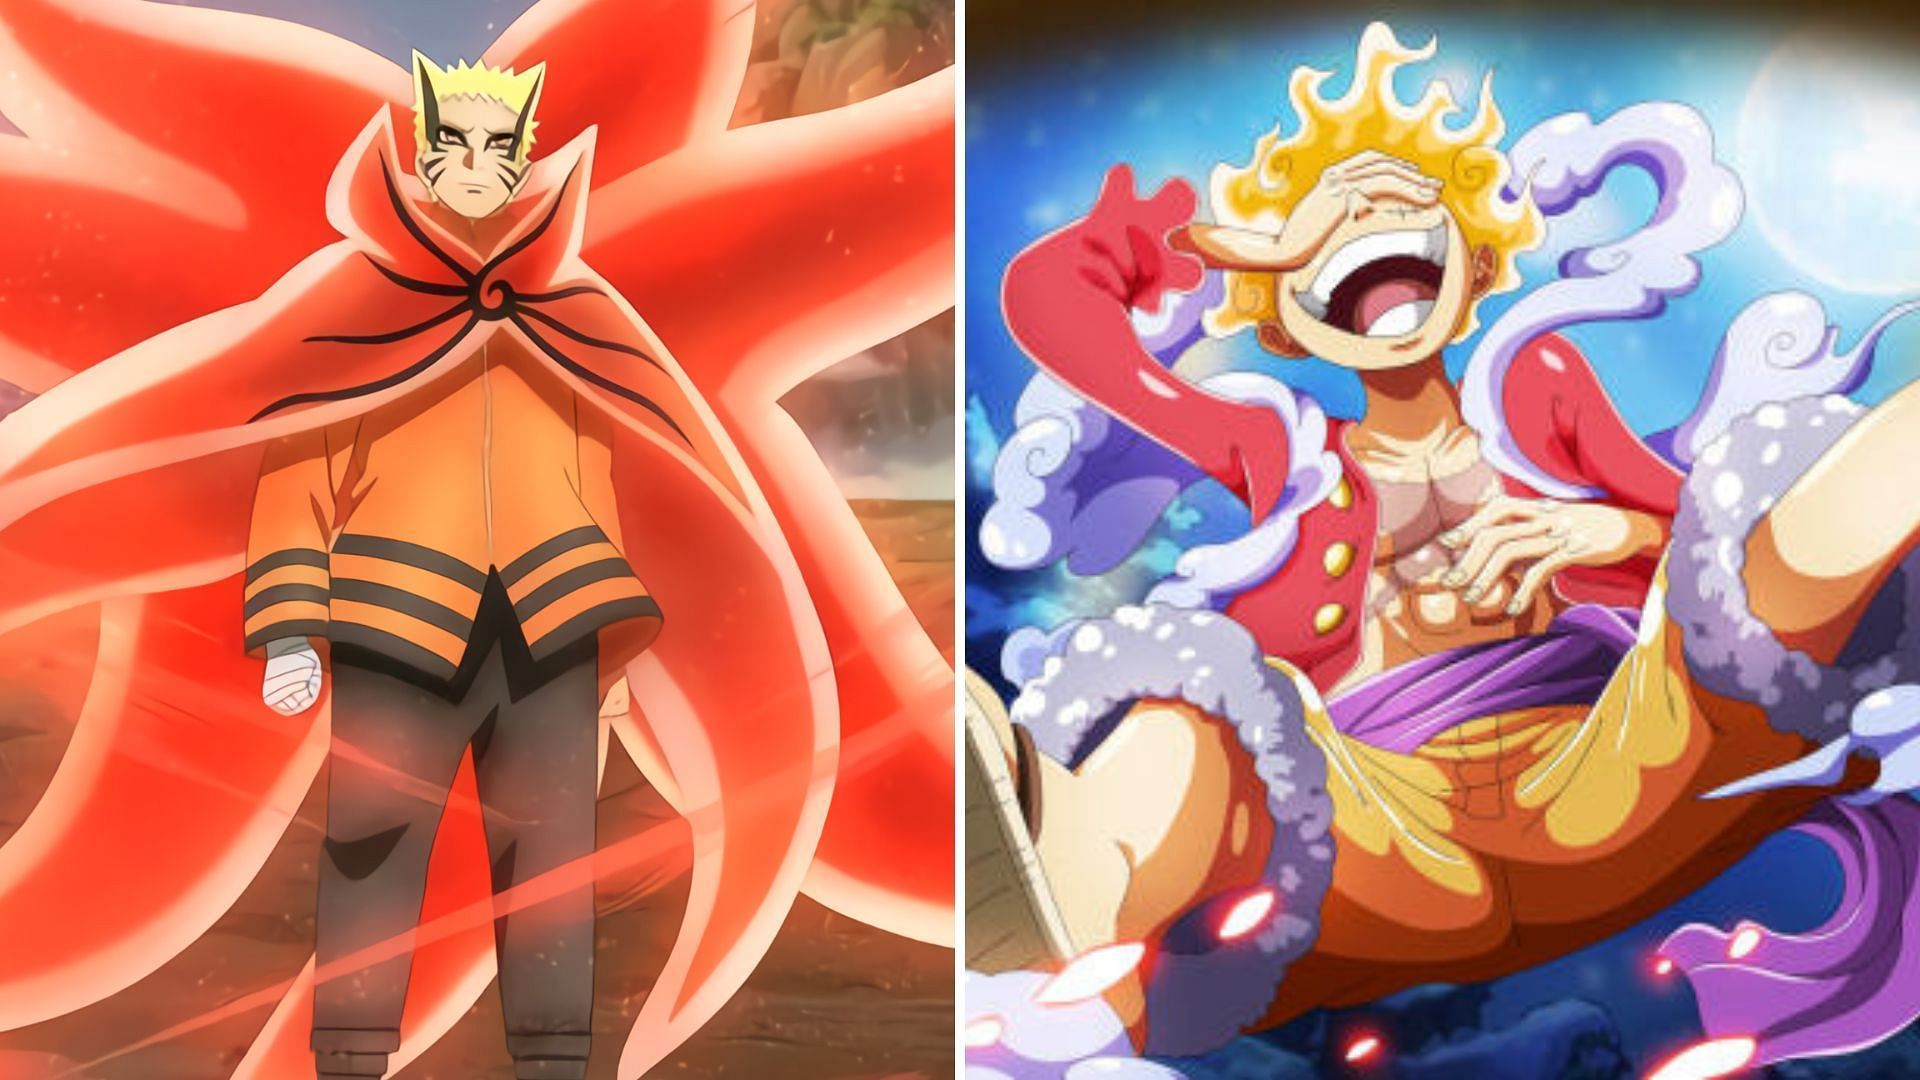 Baryon Mode Naruto vs. Luffy Gear 5: Who would win?